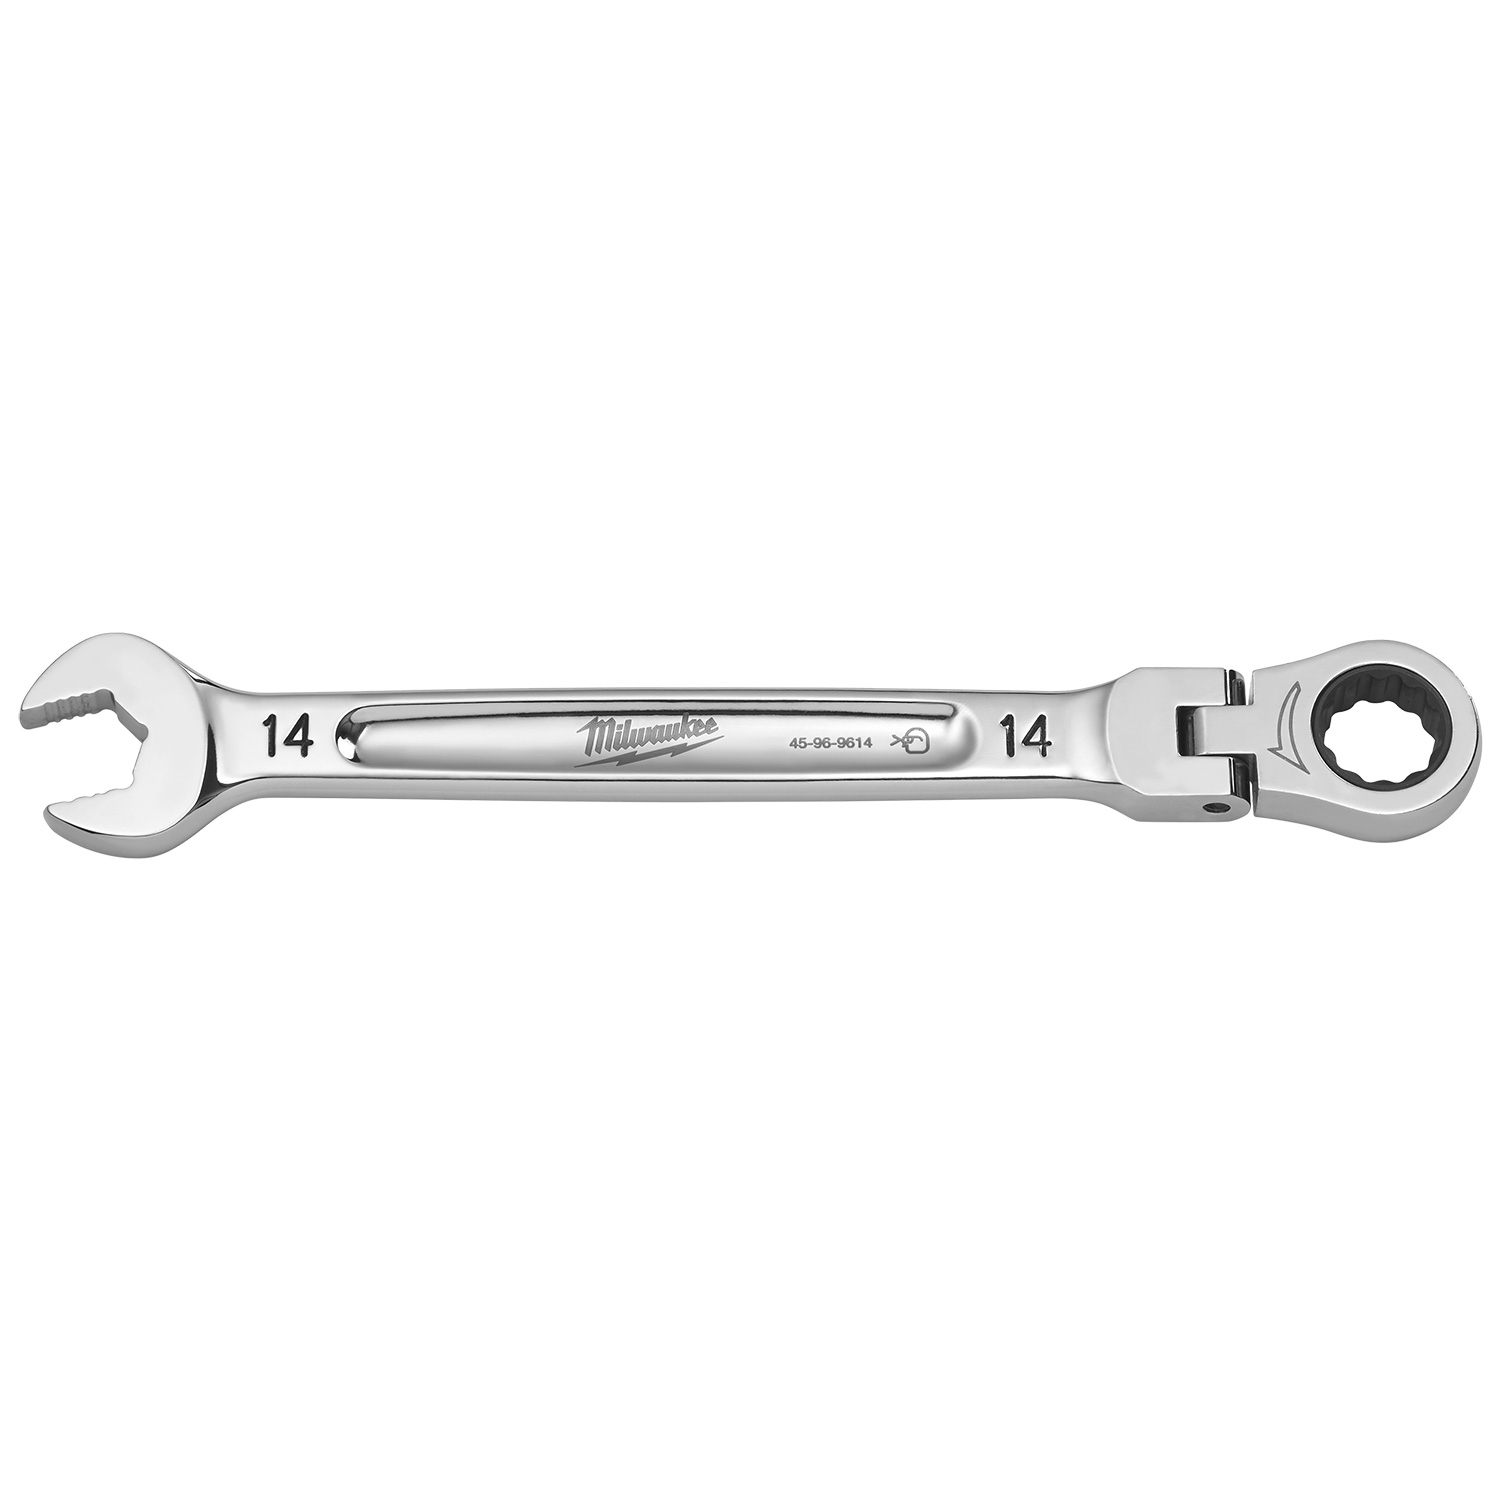 Milwaukee 14mm Flex Head Combination Wrench 45969614